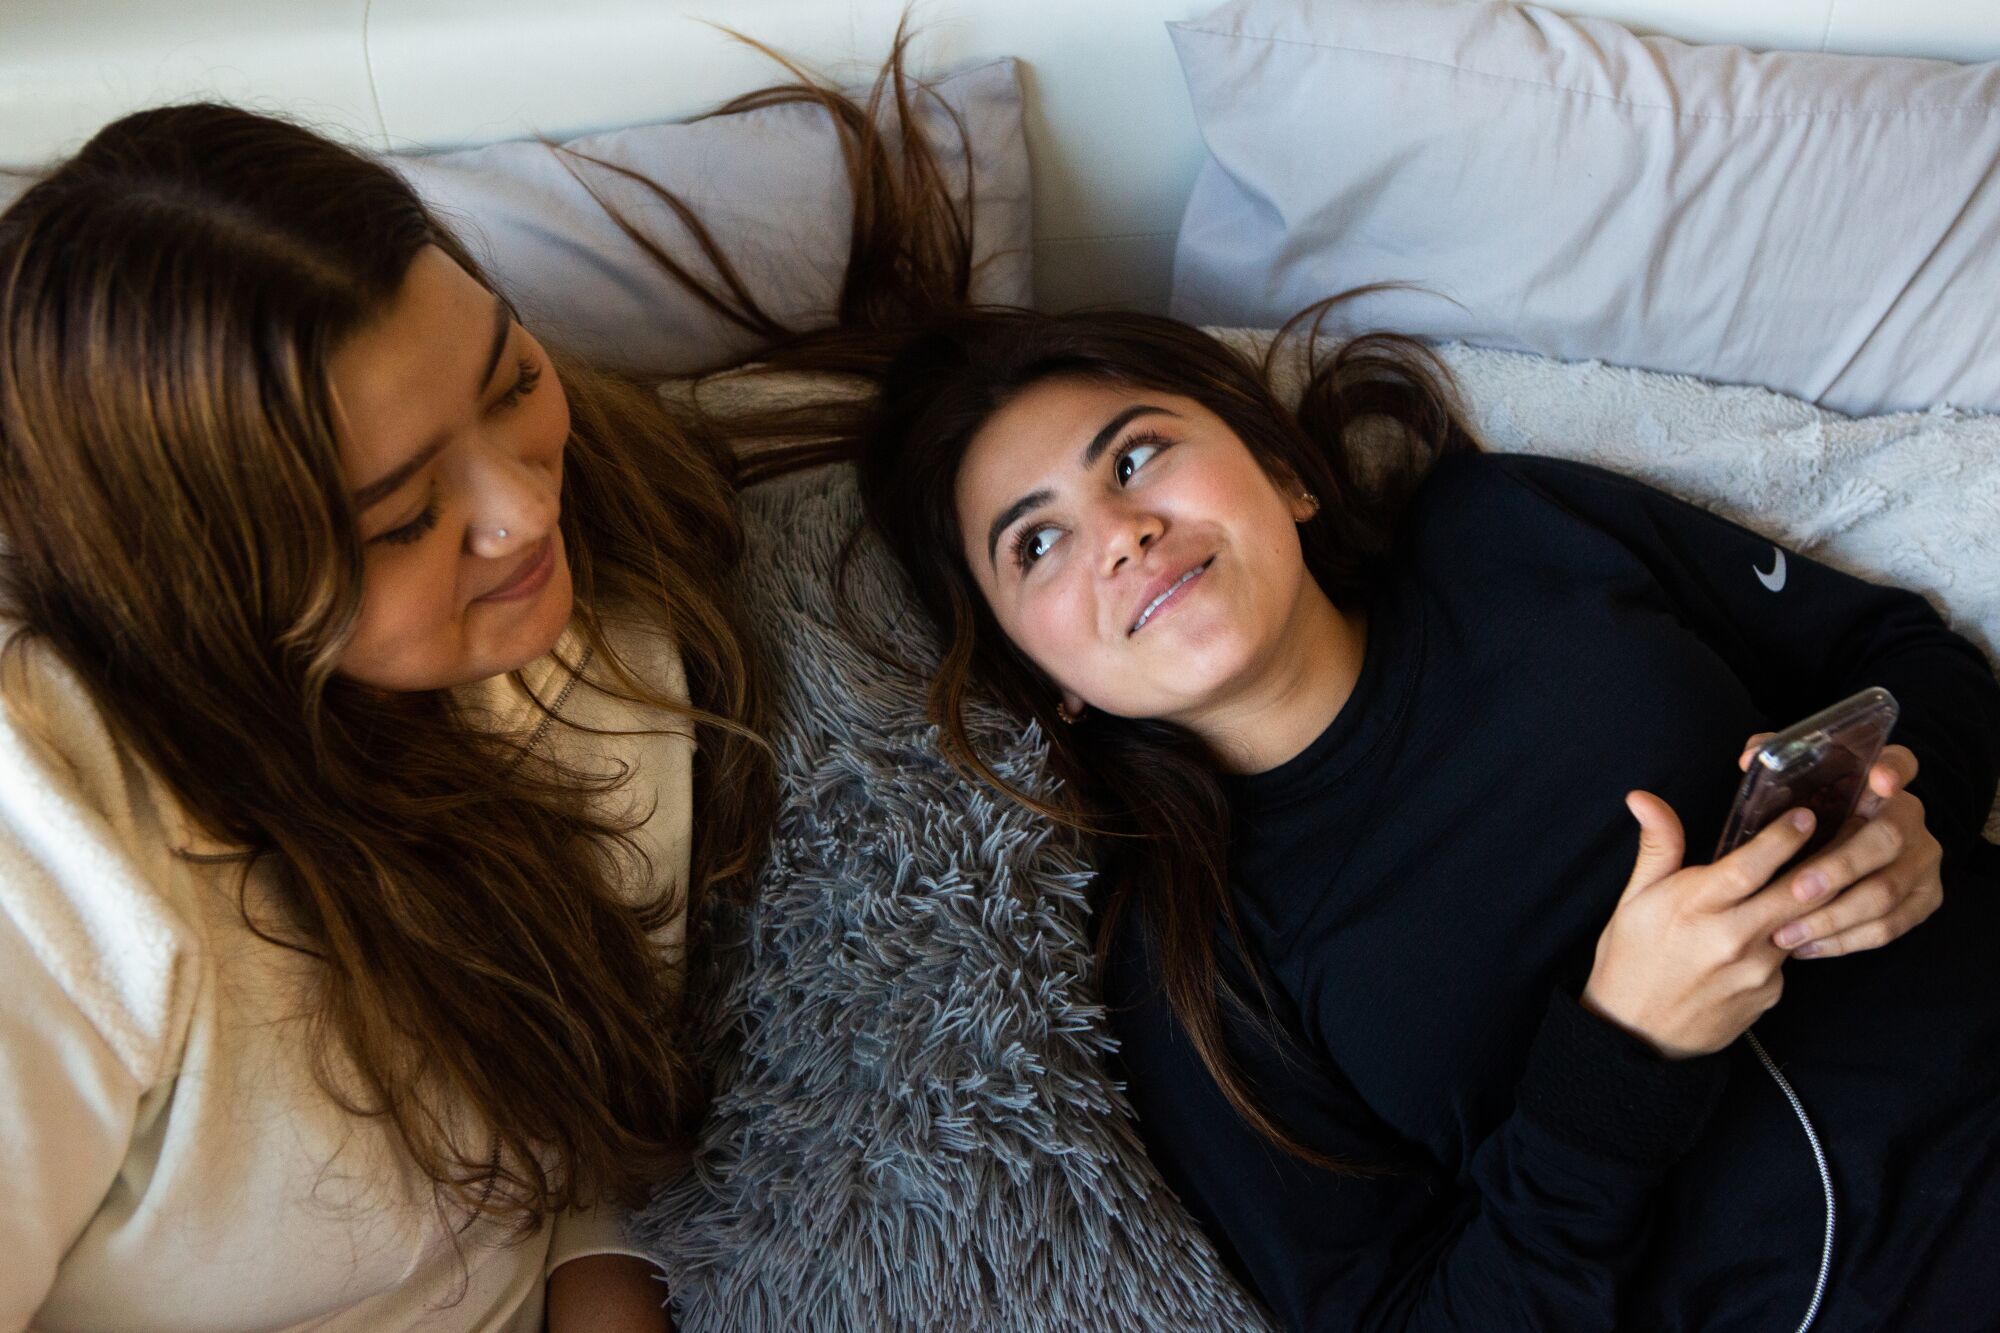 Samantha Zuniga and Dalia Hurtado share a moment while scrolling through social media at Samantha's home March 18, 2020.